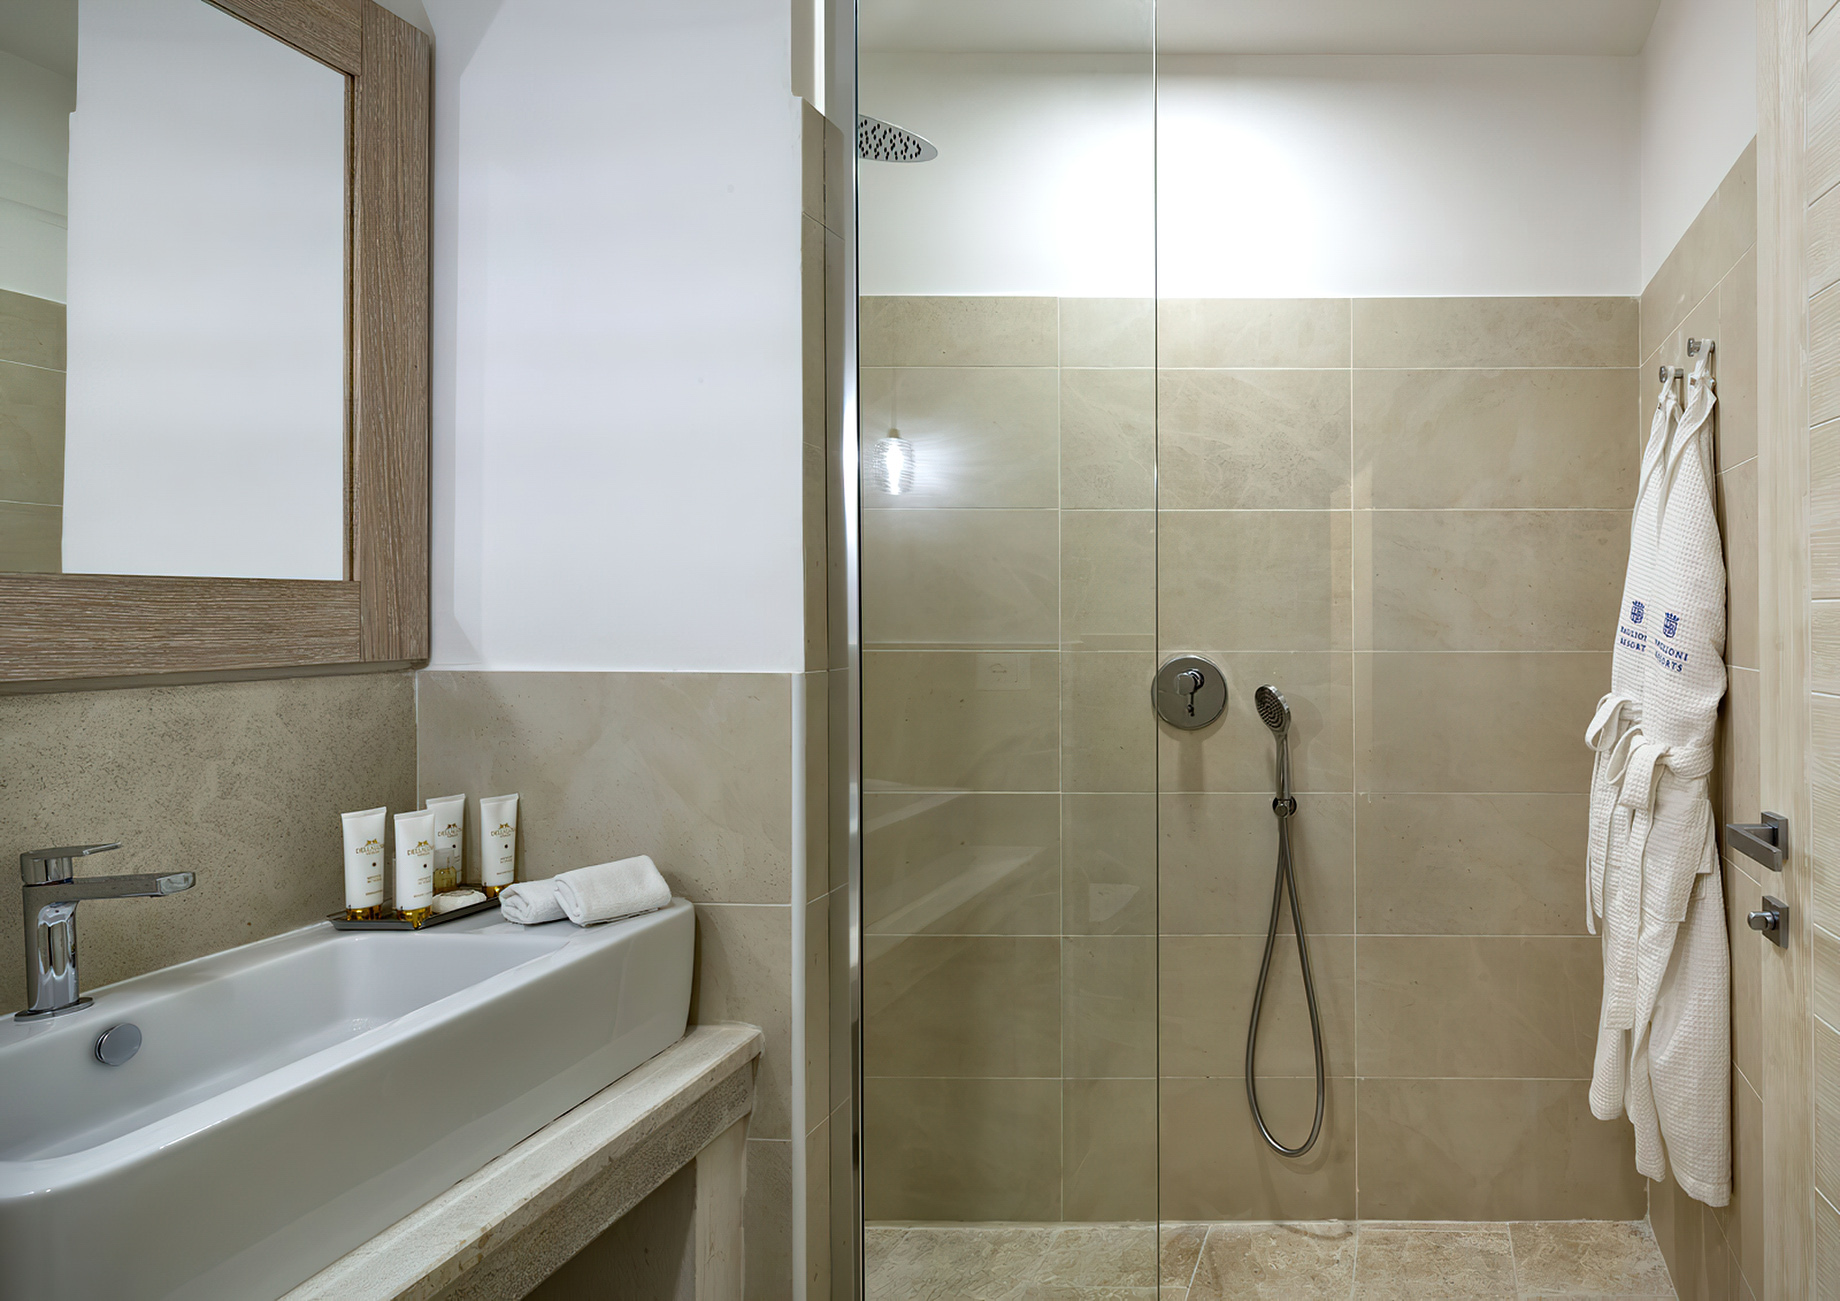 Baglioni Resort Sardinia – San Teodoro, Sardegna, Italy – San Pietro Suite Bathroom